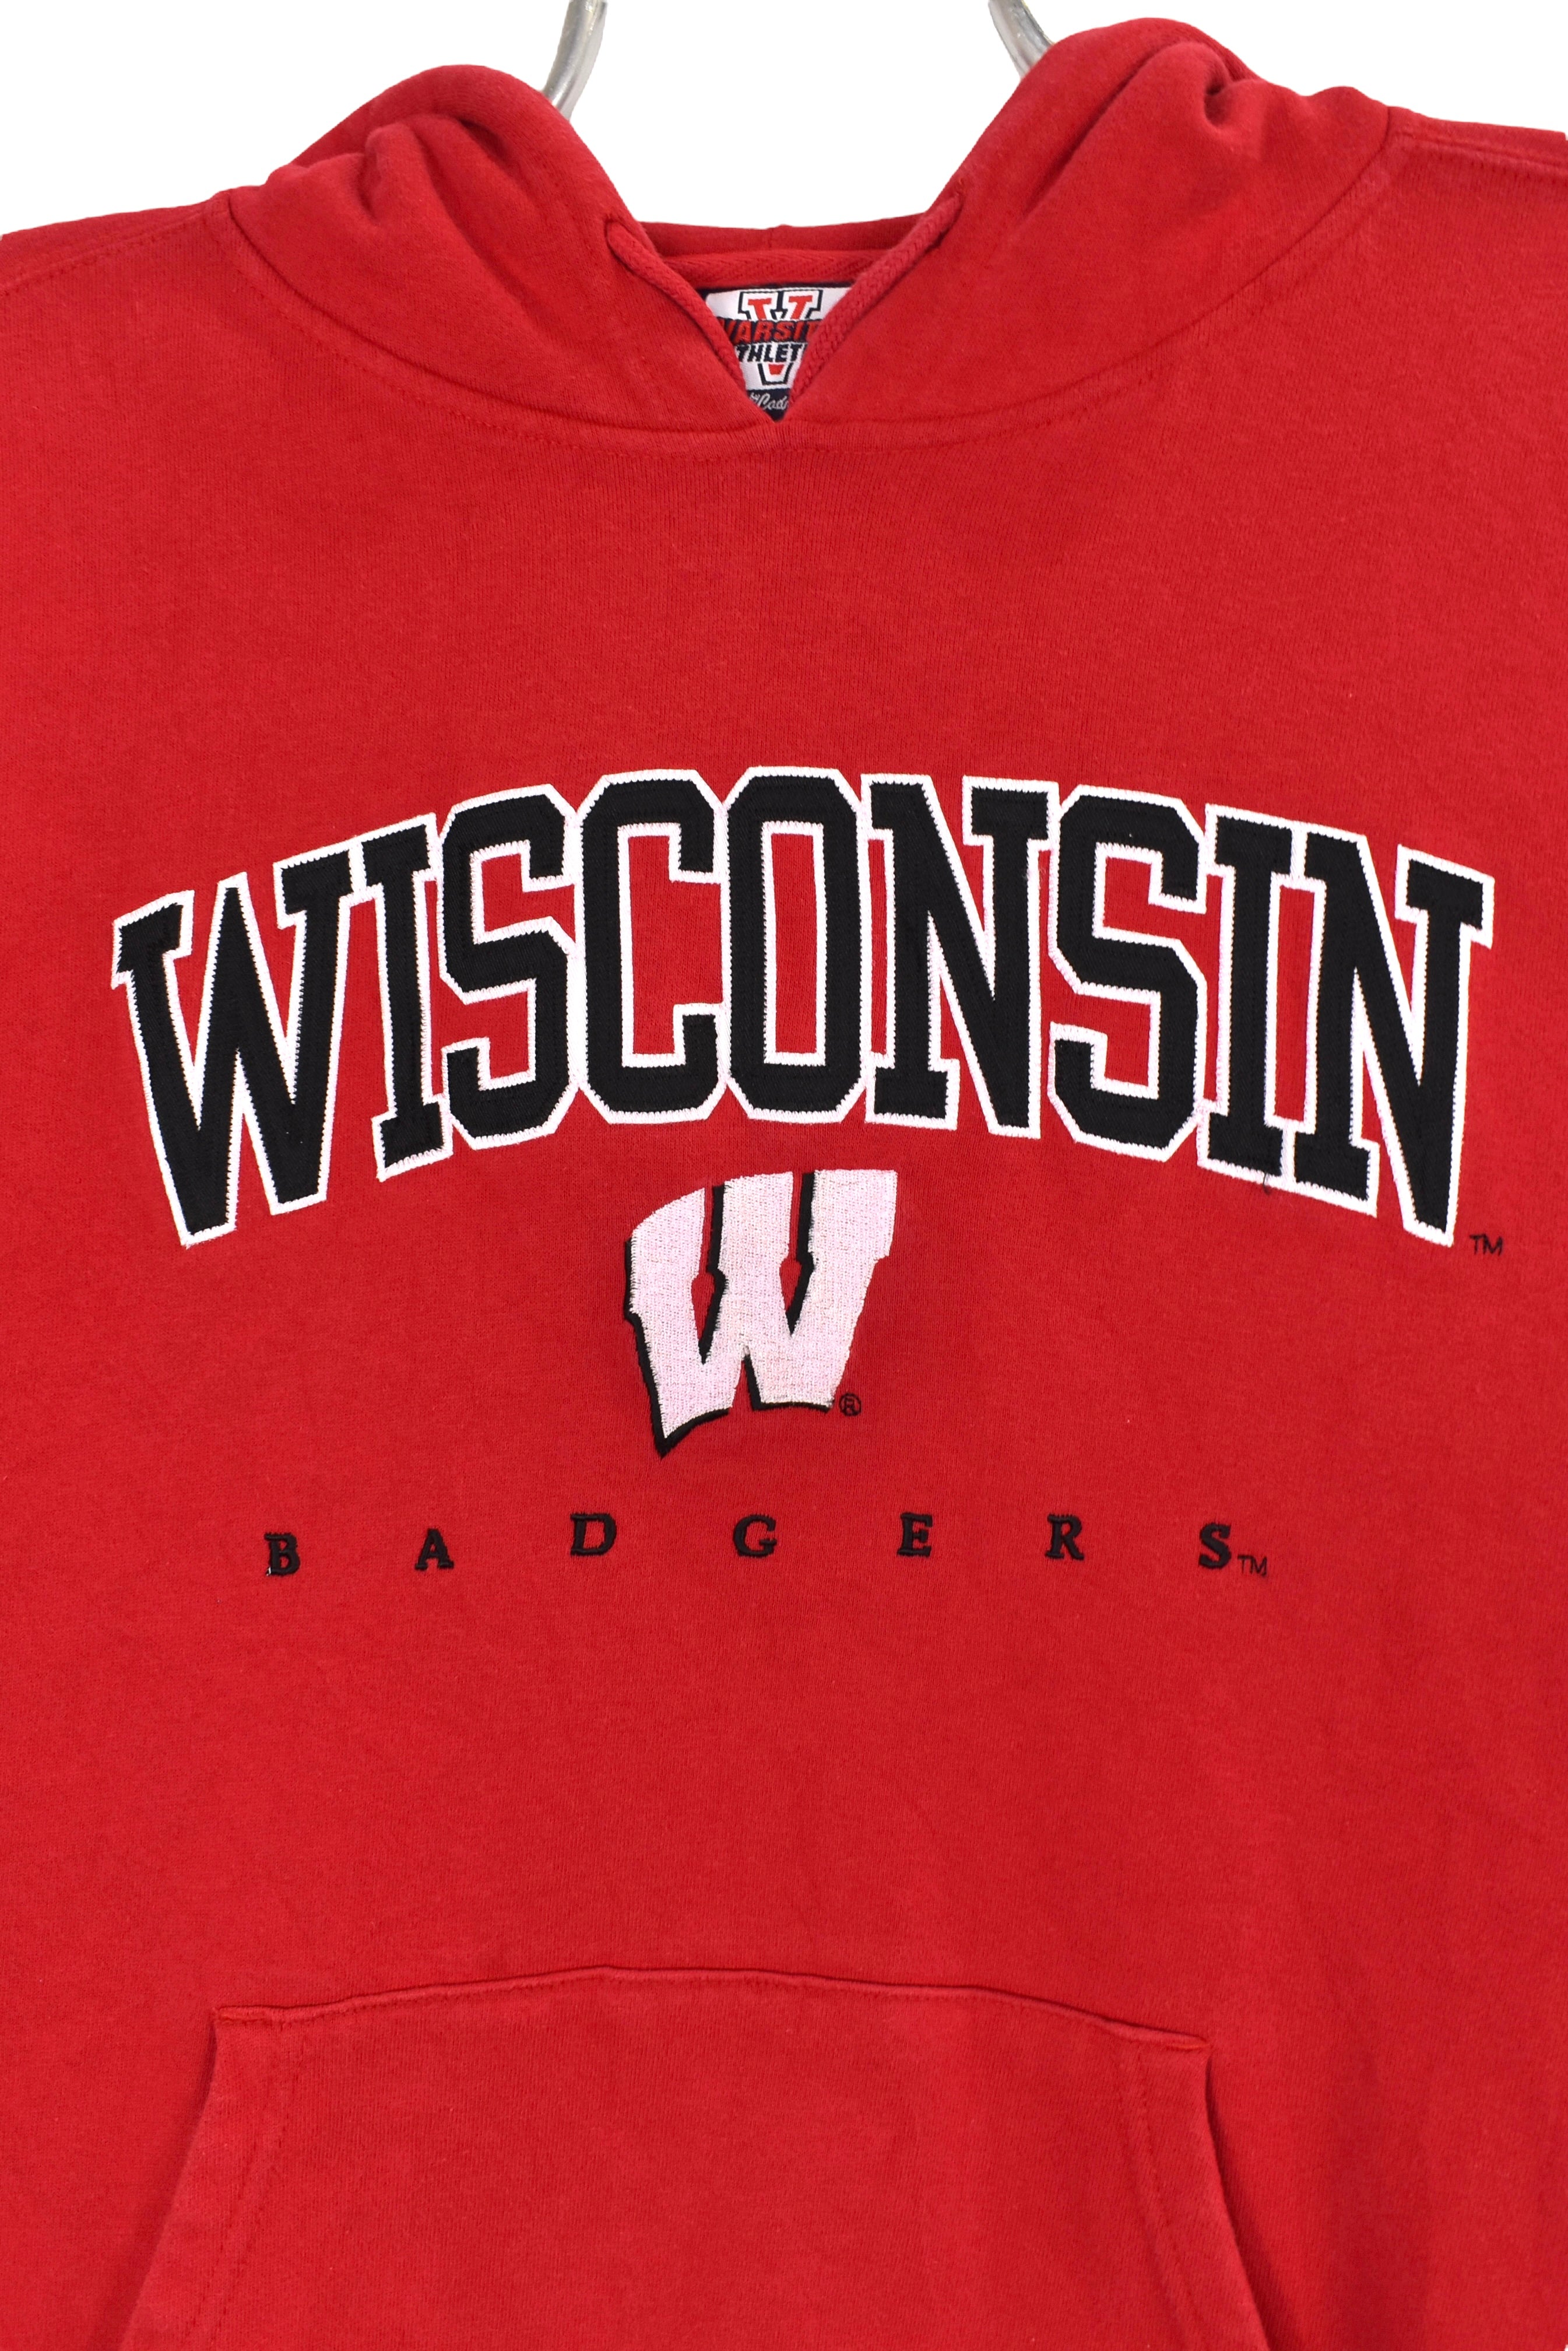 Vintage Wisconsin University hoodie (M), red embroidered sweatshirt